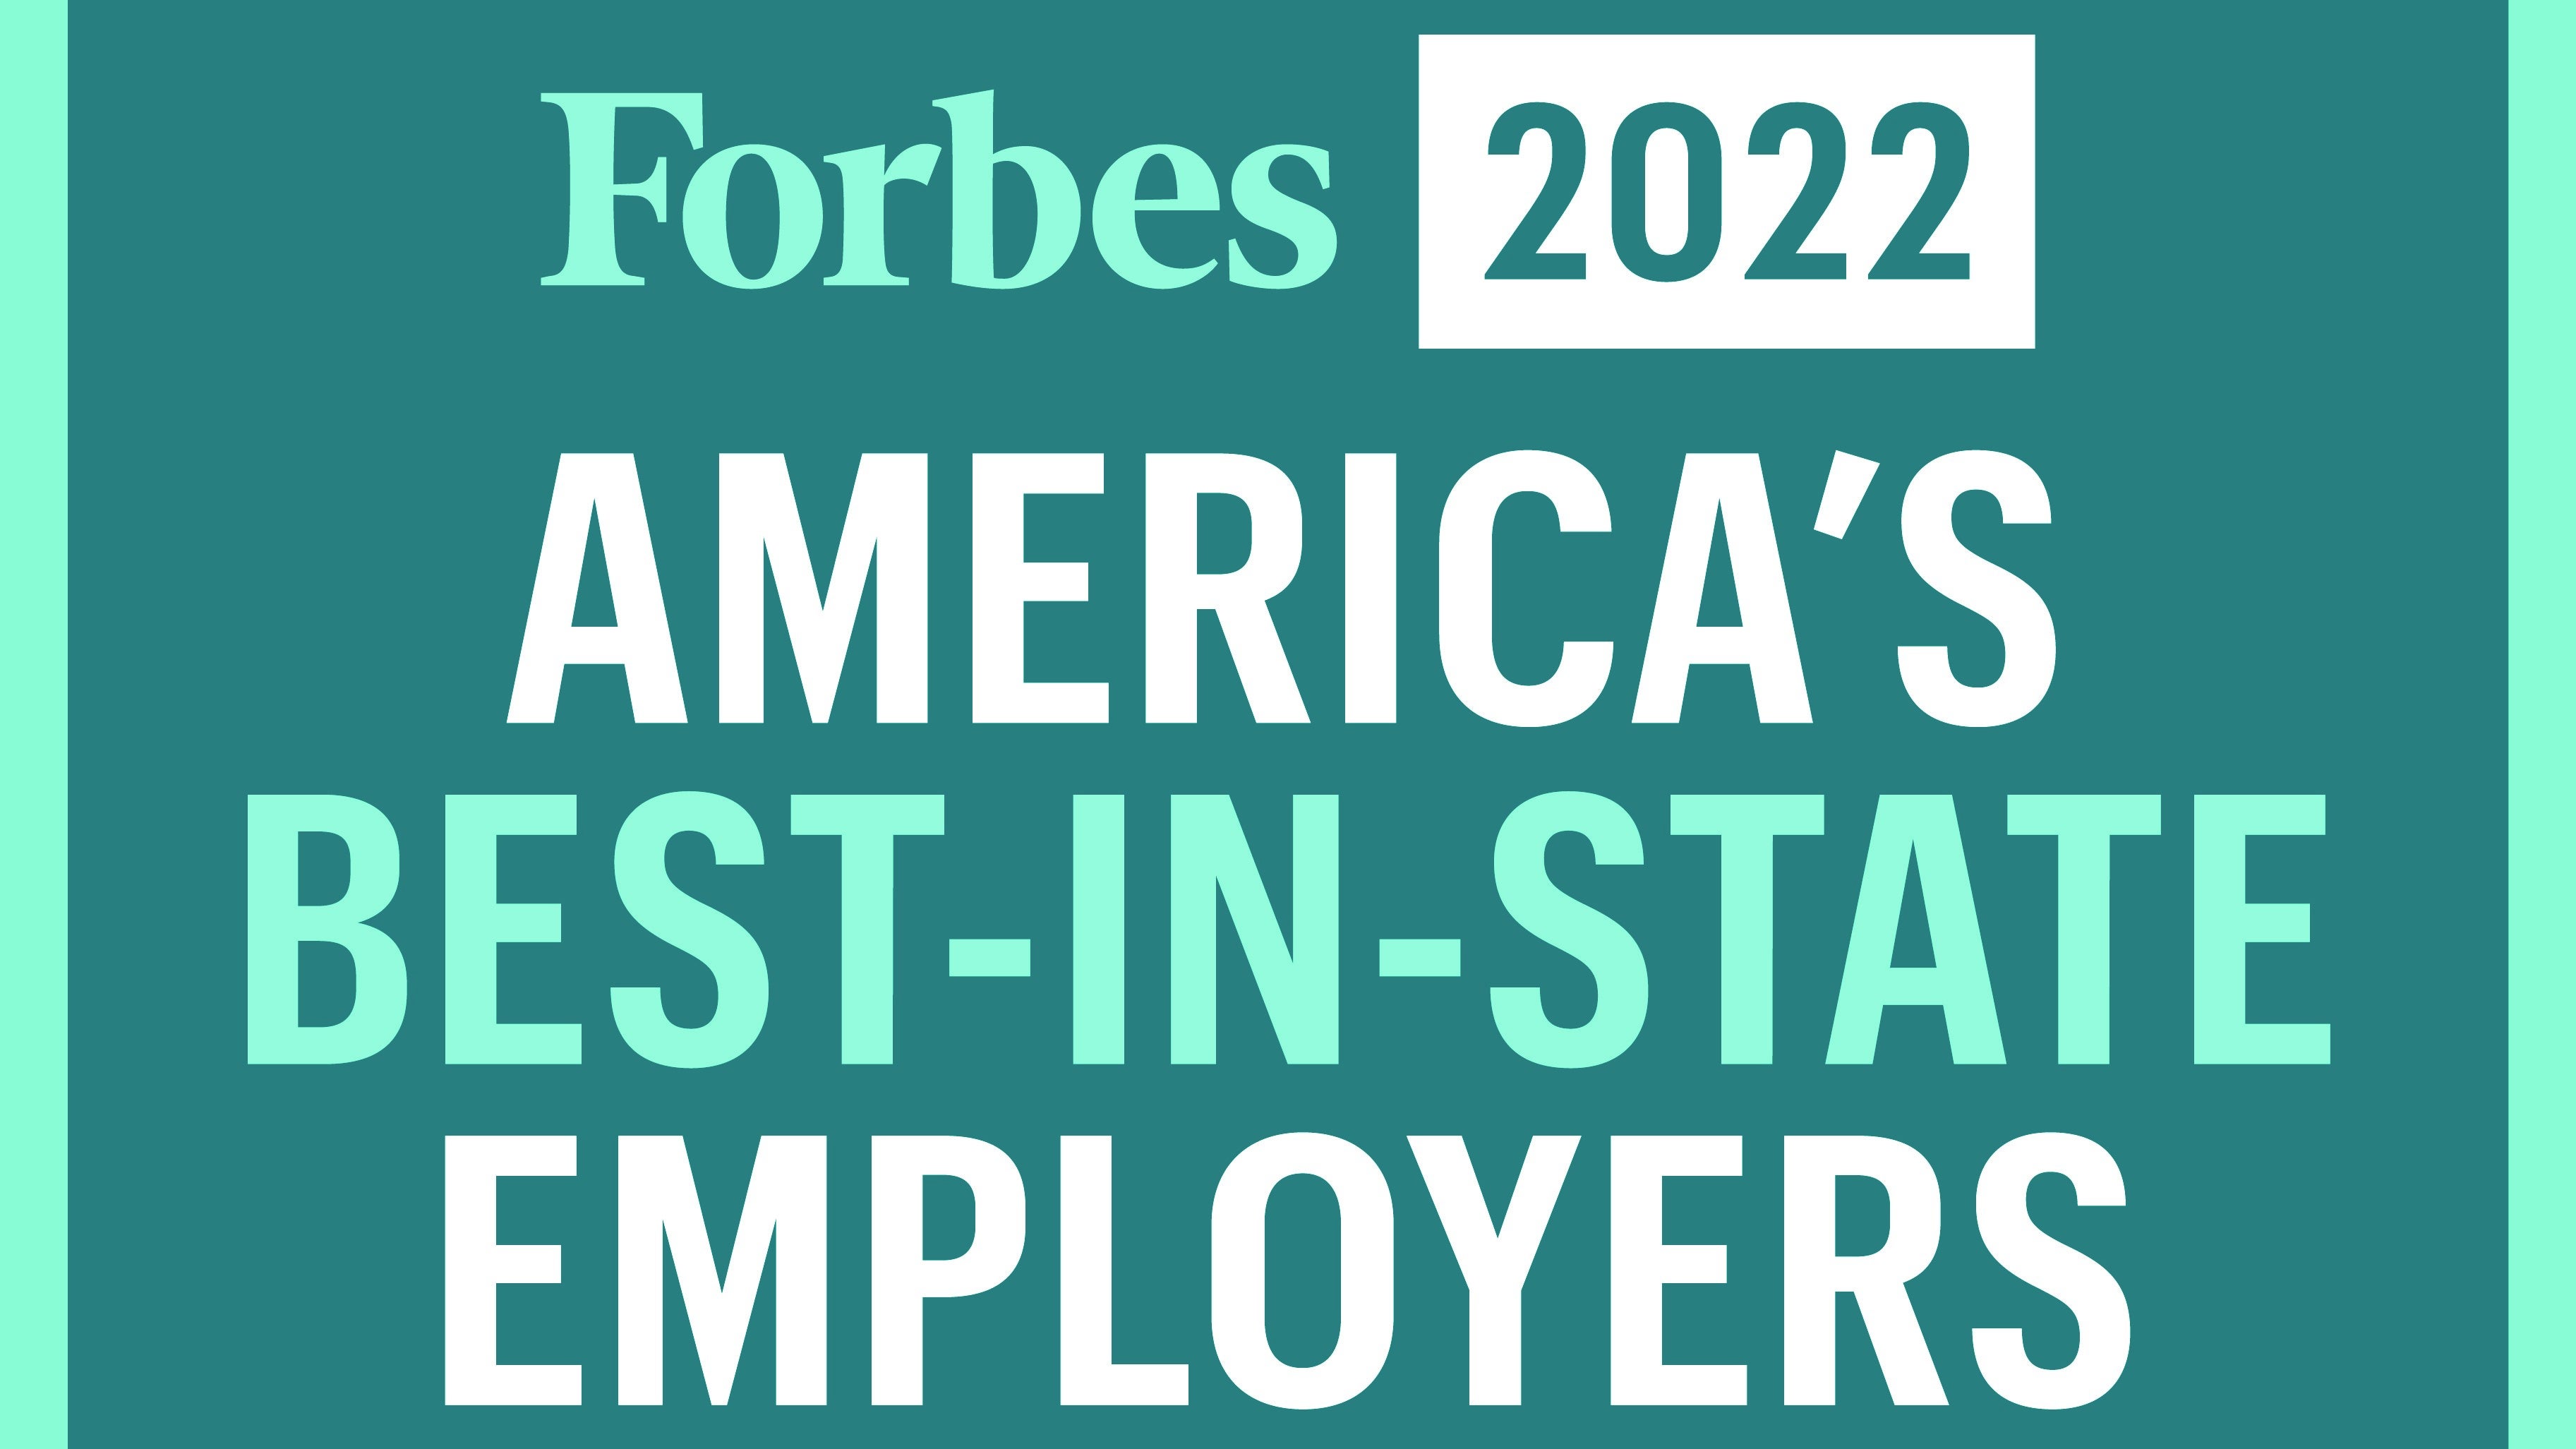 Bassett Healthcare Network Named to Forbes BestinState Employers List